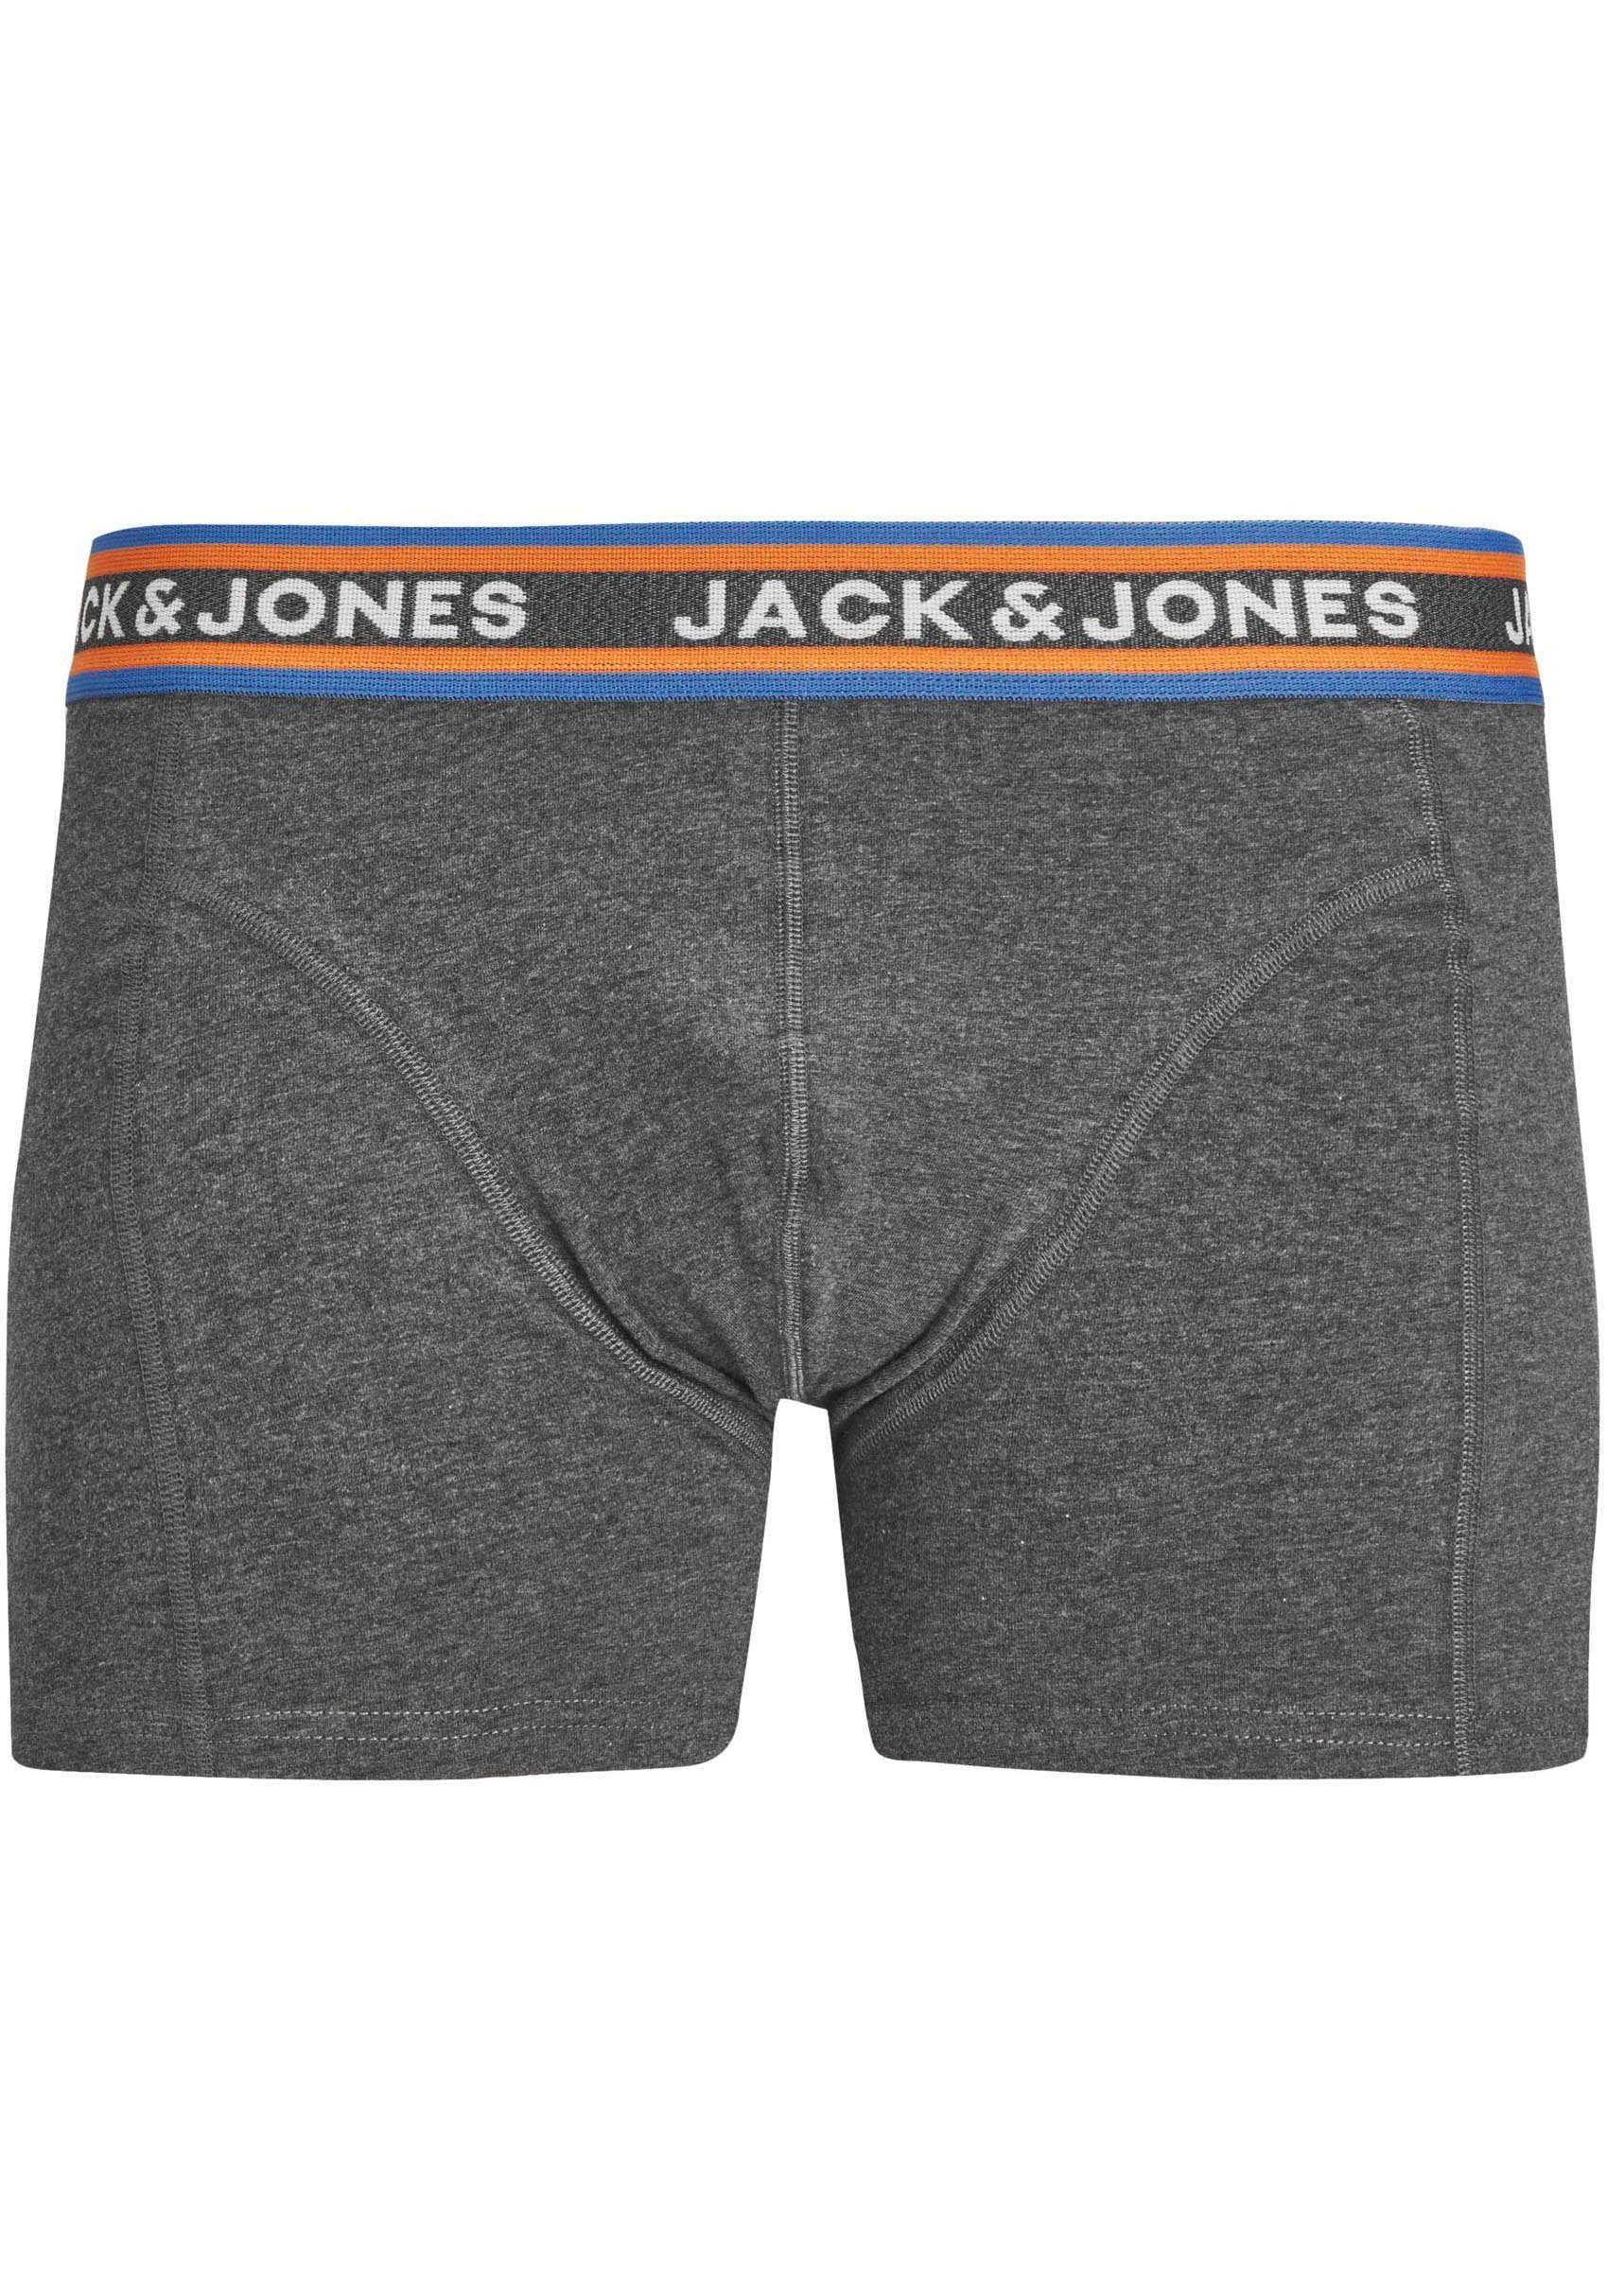 JACMYLE (Packung, / 3-St) Jones Jack & blazer NOOS 3 / exub Trunk PACK TRUNKS navy dgm